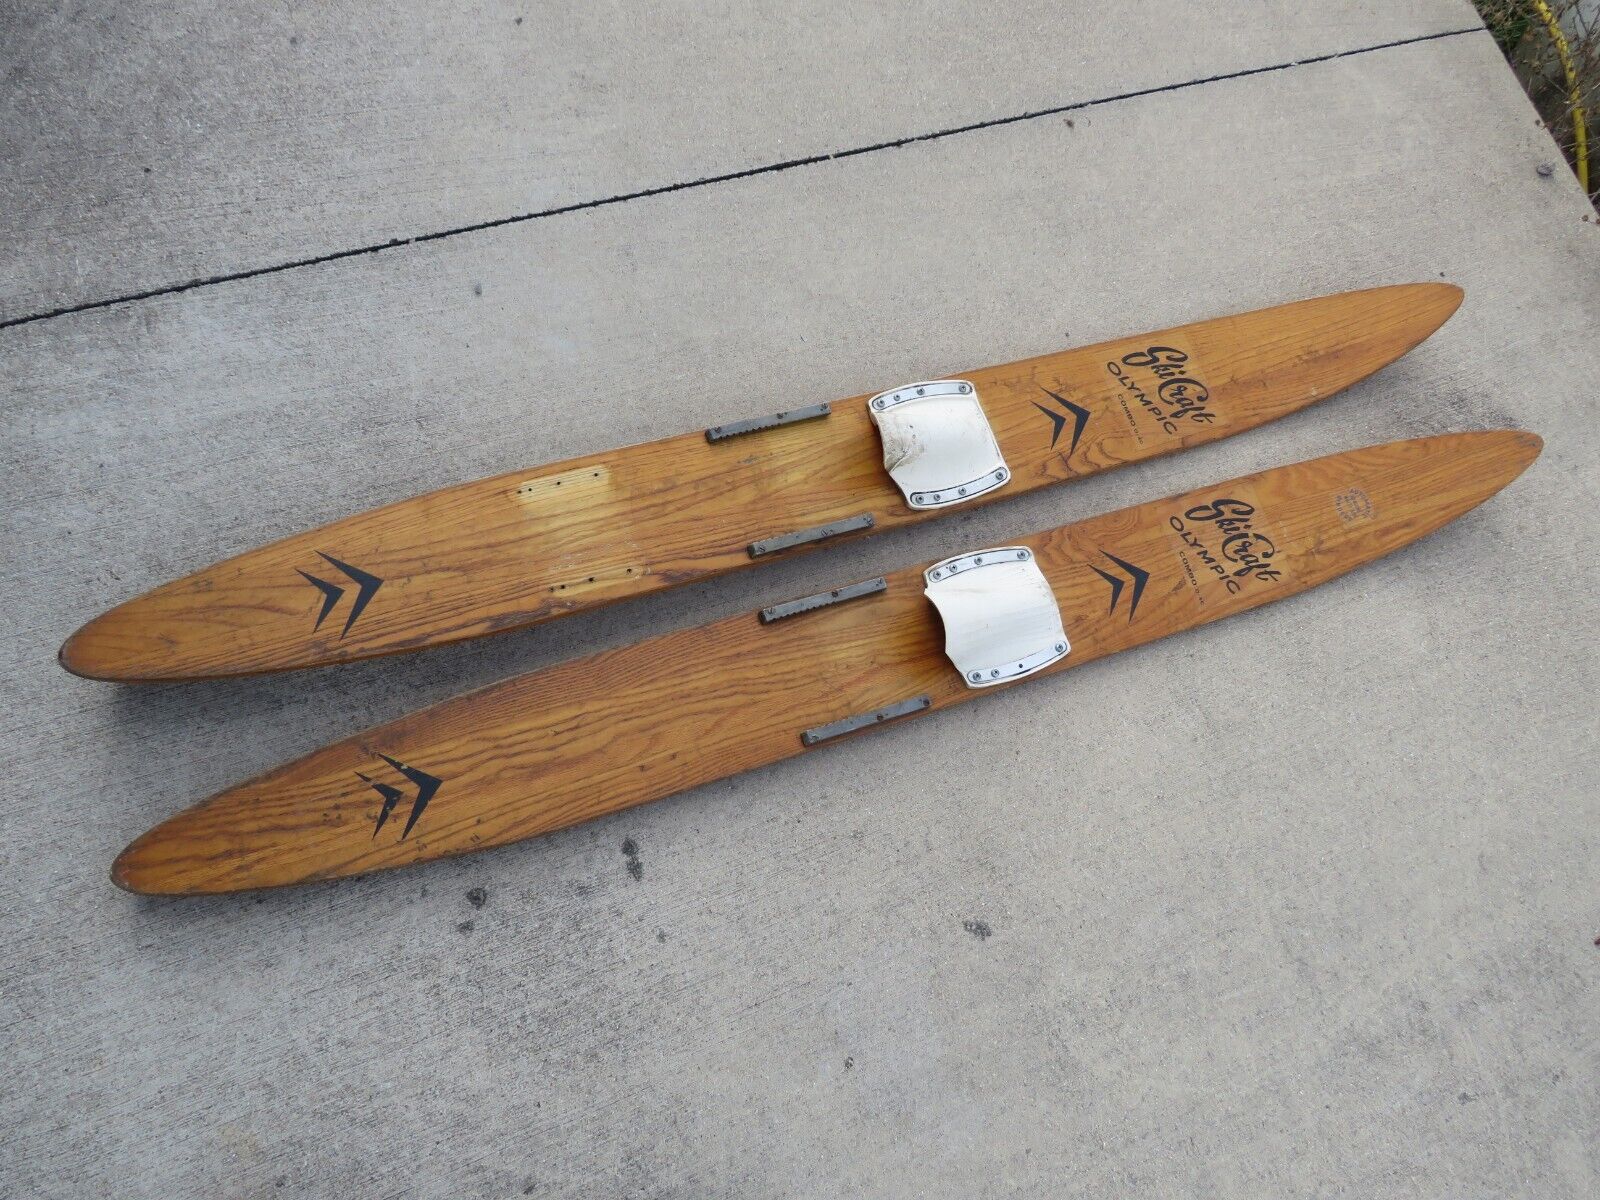 Vintage Water Skis Marked “Ski Craft Olympic” ~ Parts or Display